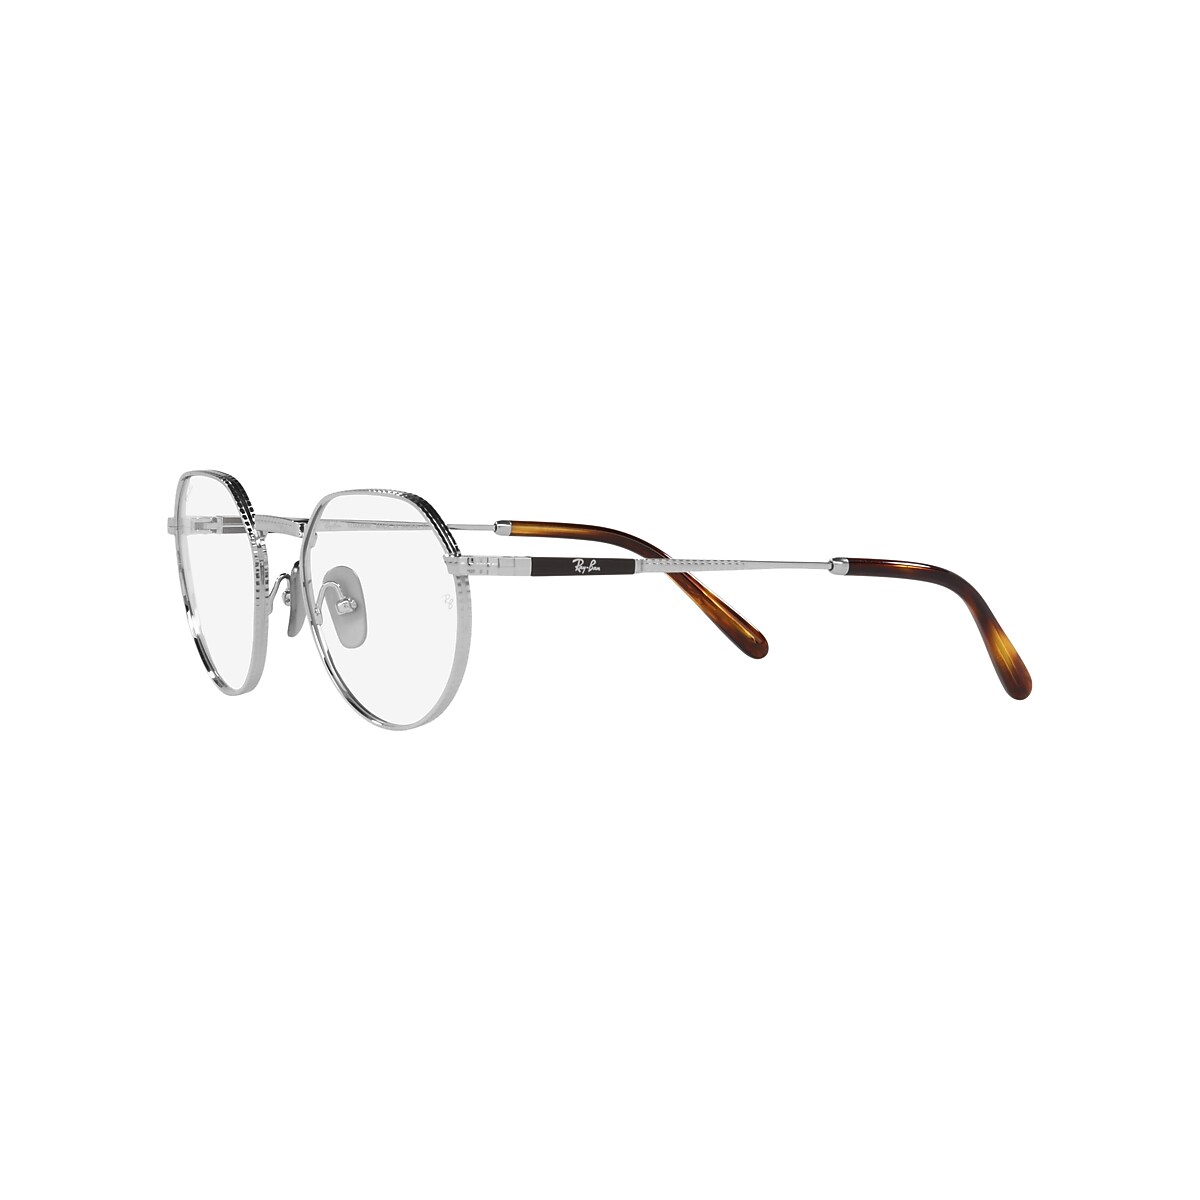 JACK II TITANIUM OPTICS Eyeglasses with Silver Frame - RB8265V